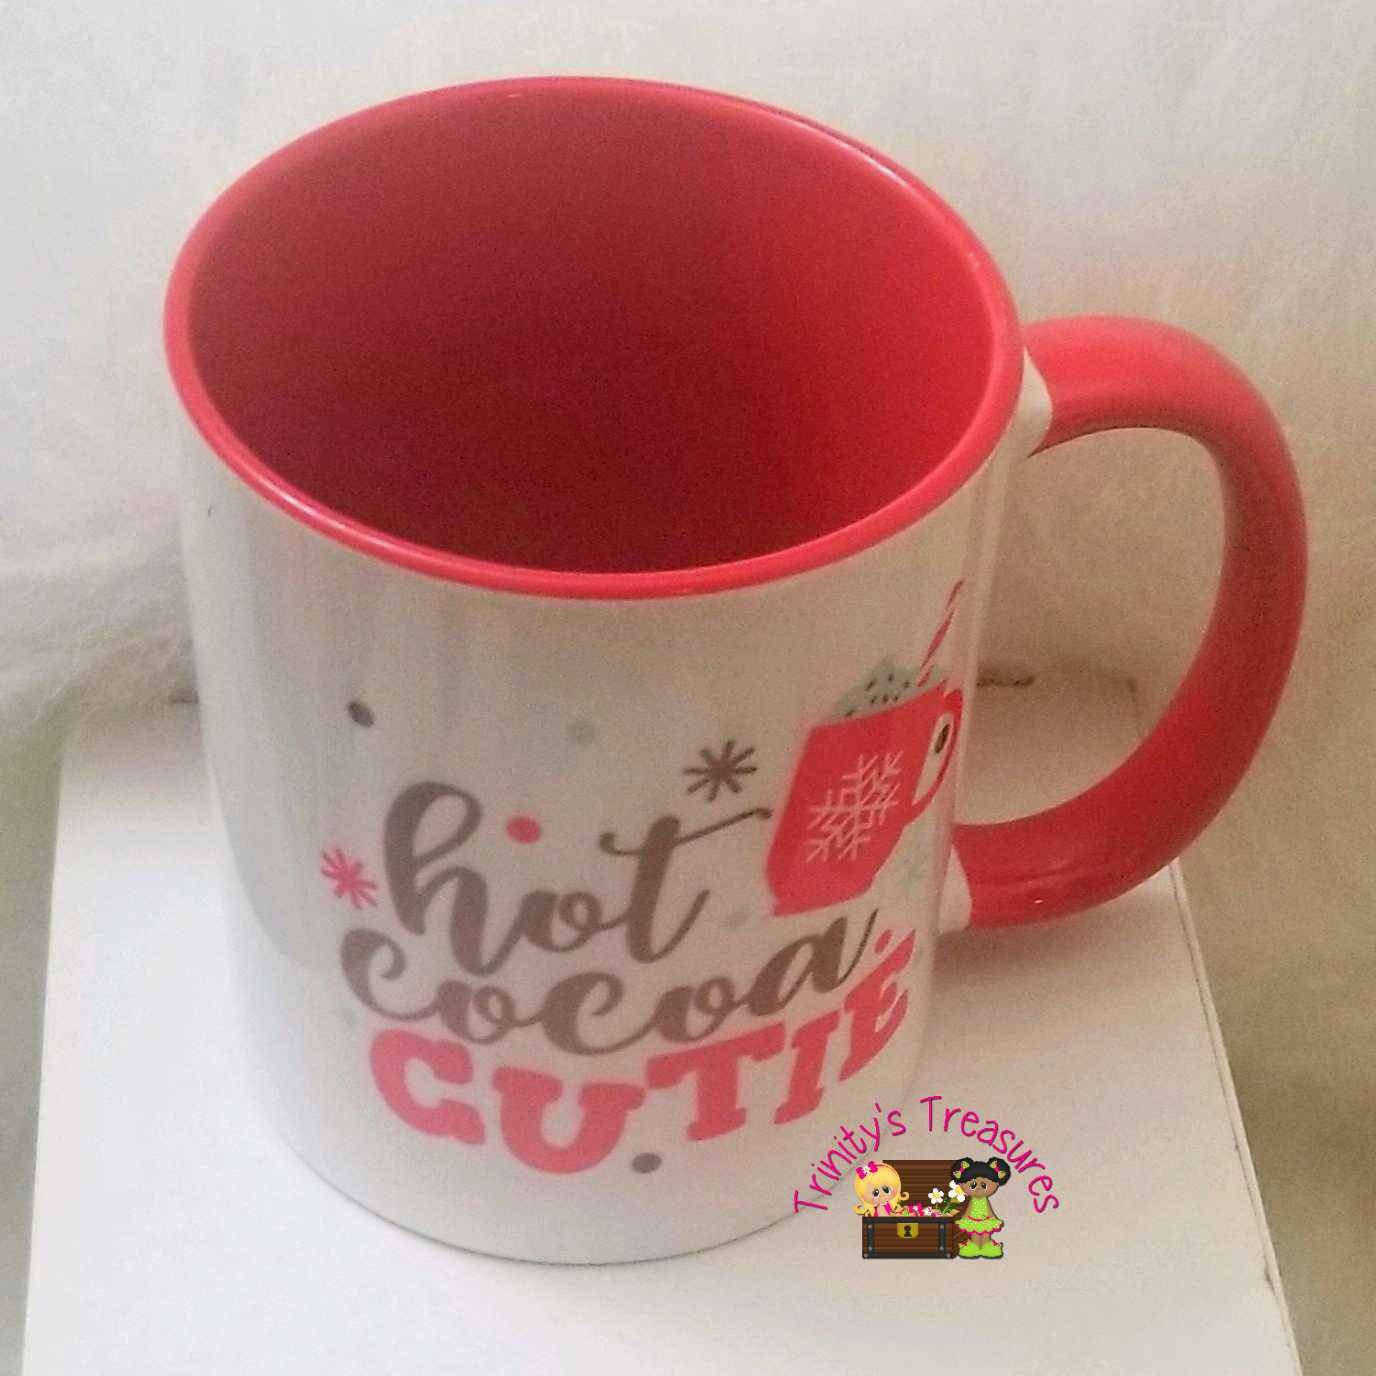 The Pit (Cukur) Mug Tea Cups 11oz Drinkware Novelty Gifts